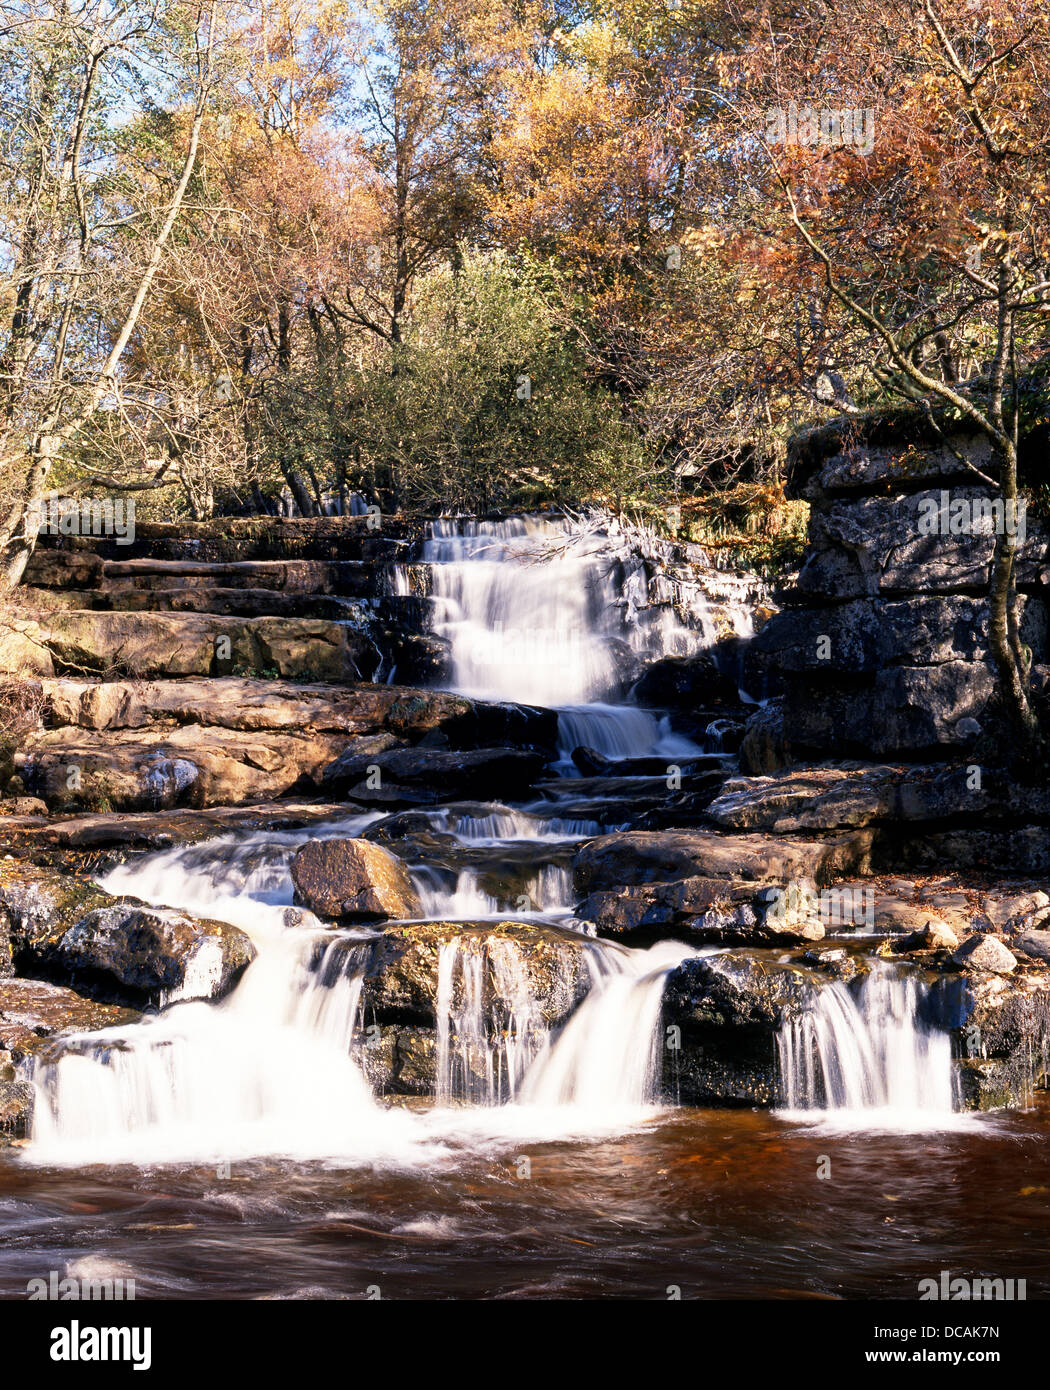 Kisdon Falls Waterfall, Keld, Yorkshire Dales, North Yorkshire, England, UK, Great Britain, Western Europe. Stock Photo